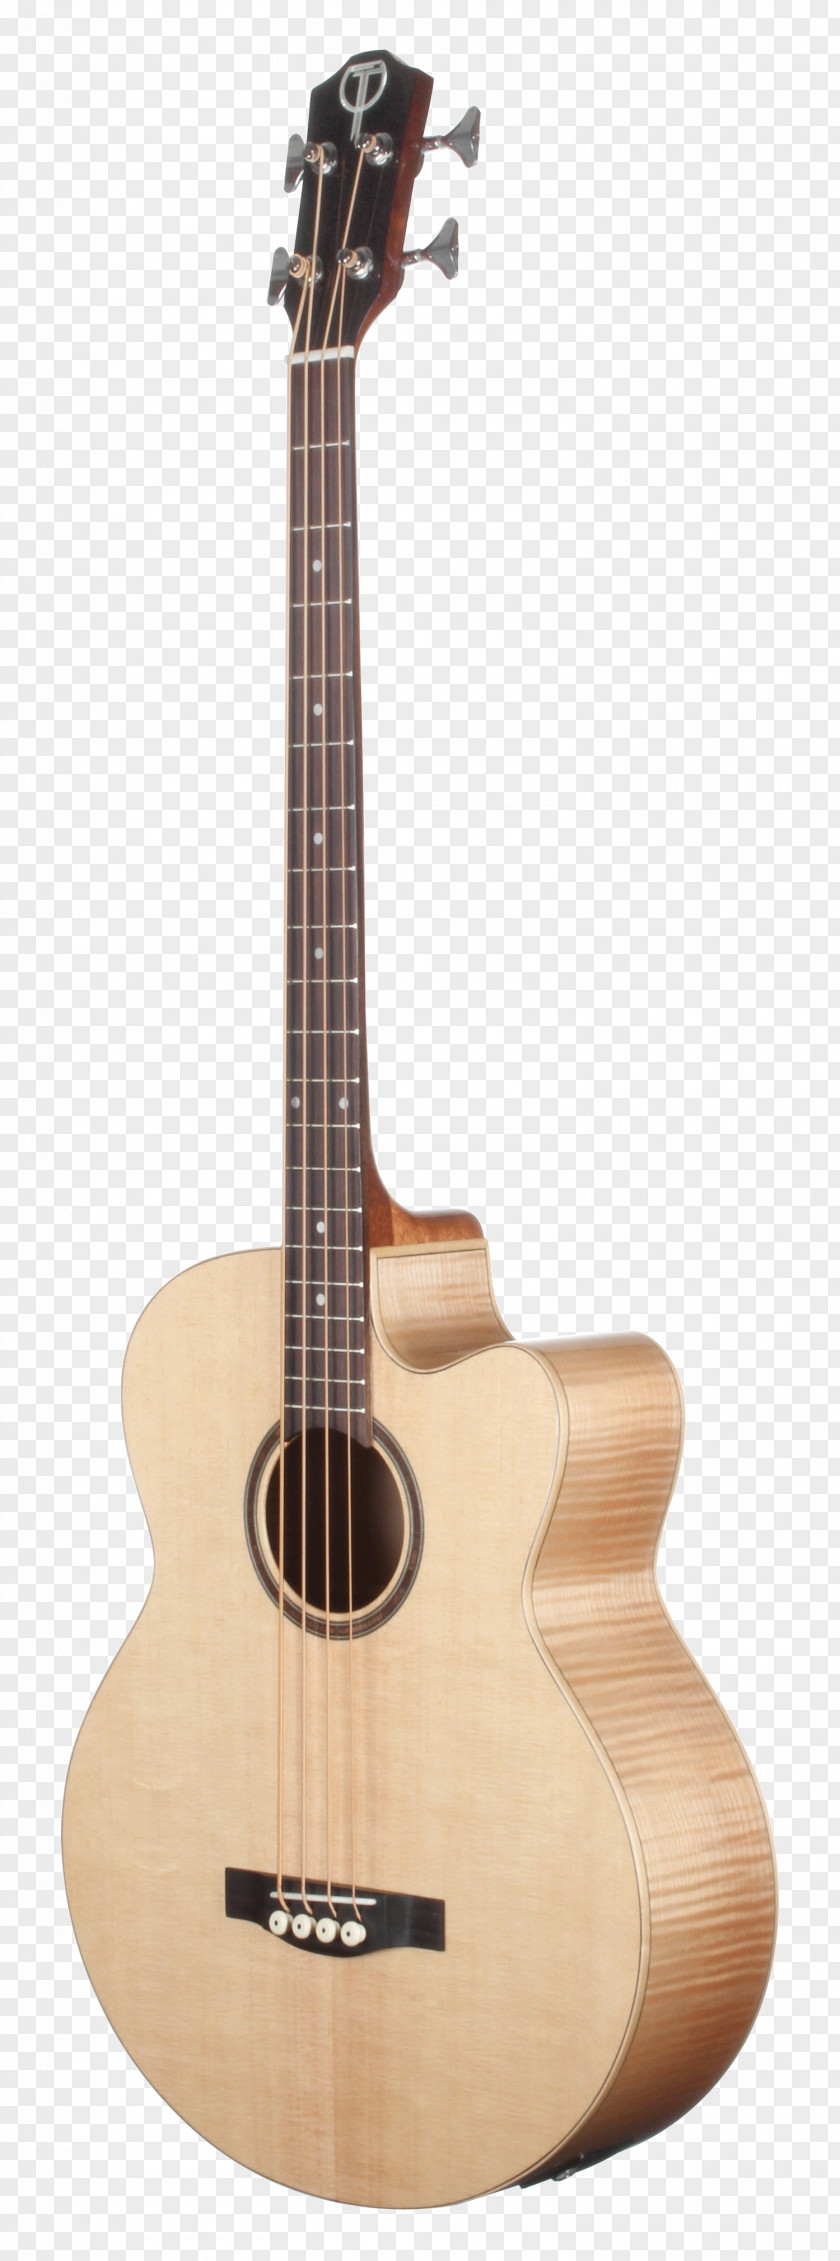 Bass Guitar Ukulele Acoustic Musical Instruments PNG